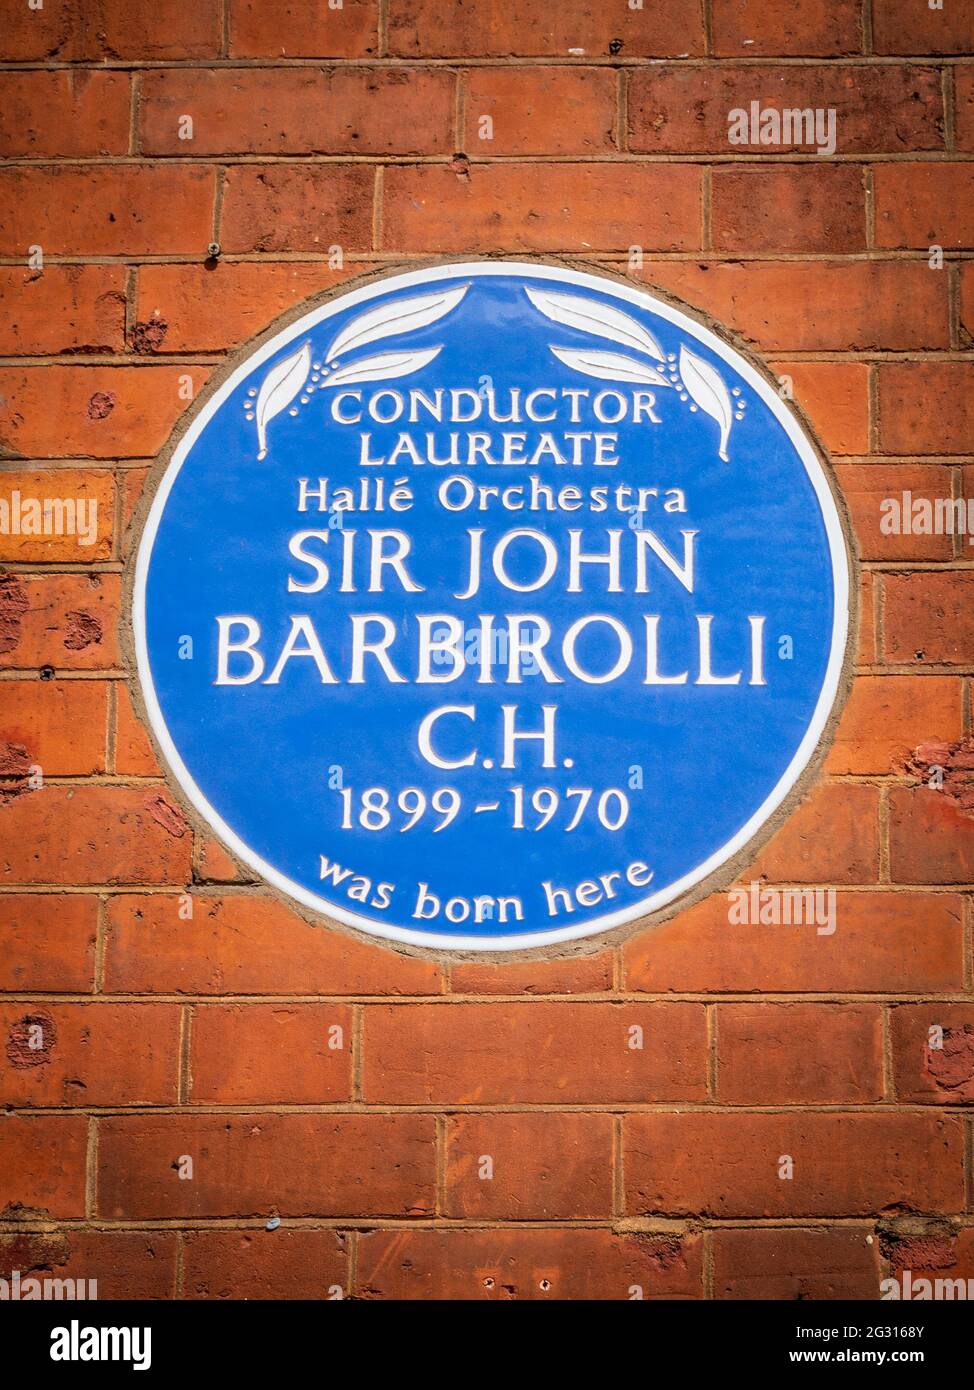 Sir John Barbirolli Blaue Plakette Southampton Row London - Dirigent Laureate Hallé Orchestra Sir John Barbirolli C.H. 1899-1970 wurde hier geboren. Stockfoto